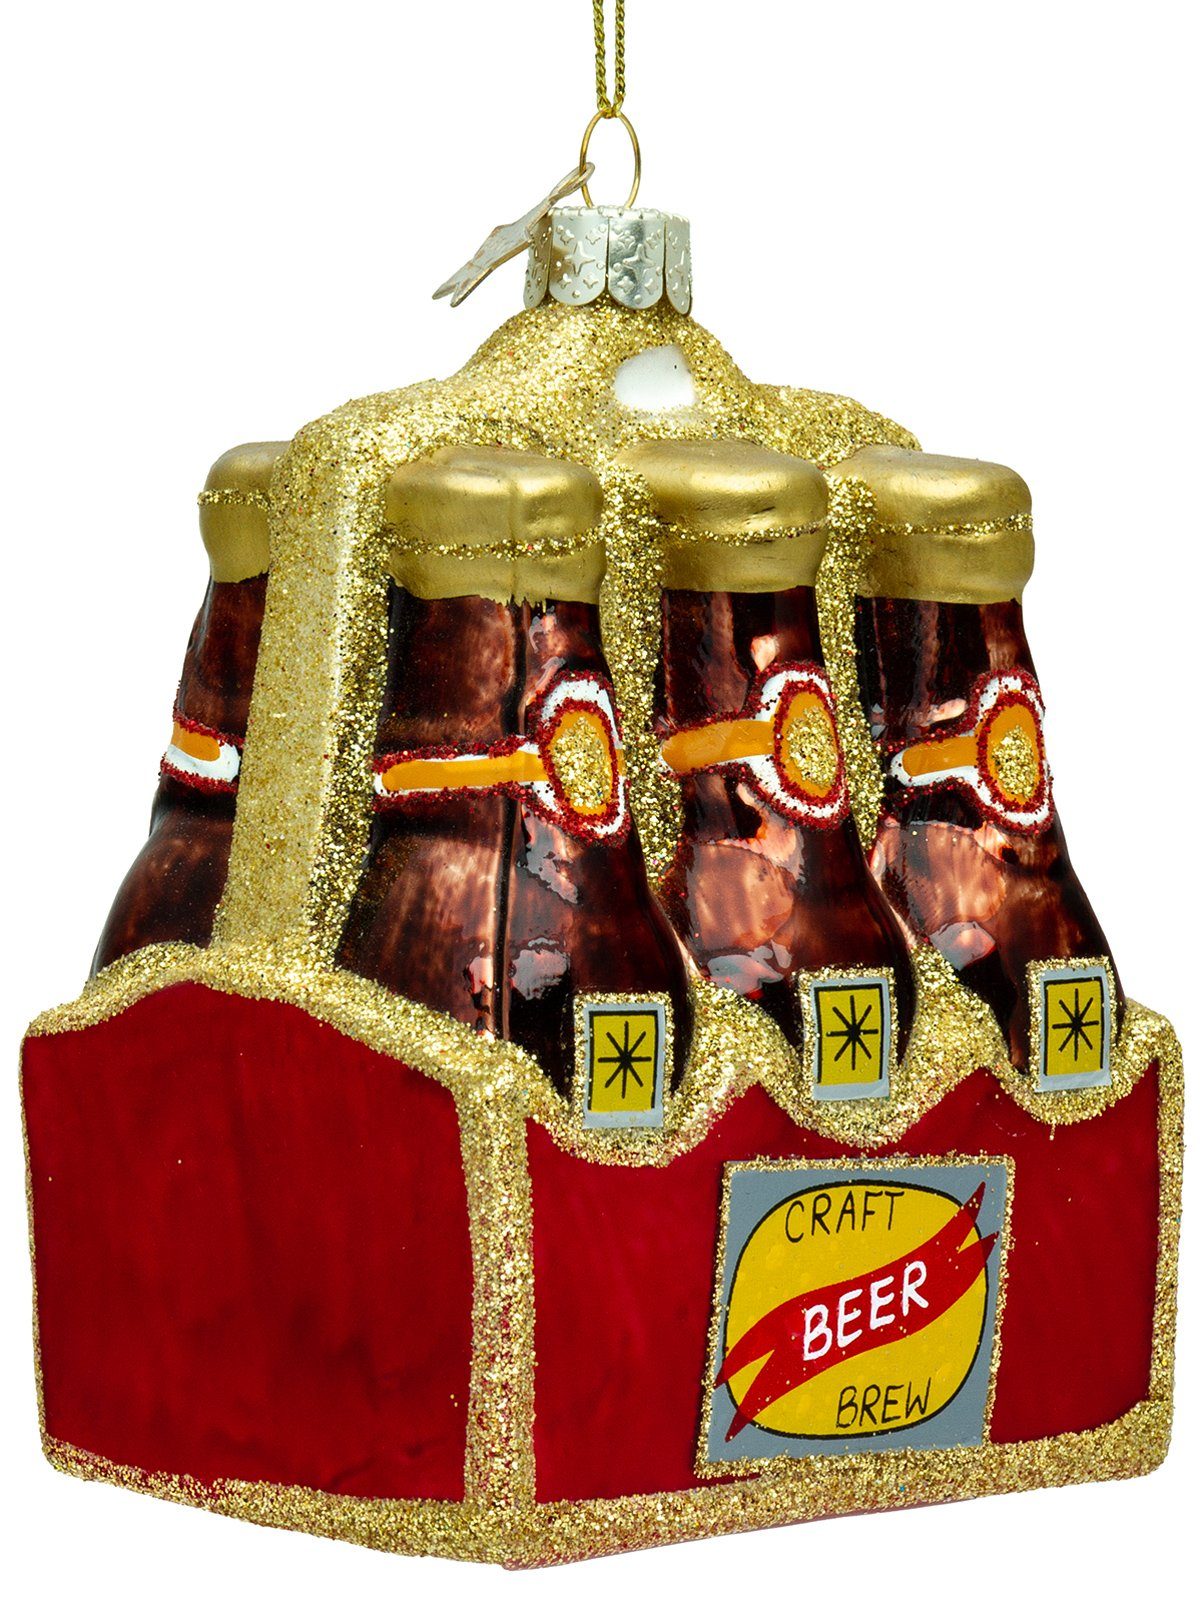 SIKORA Six-Pack Craft Christbaumschmuck Anhänger Weihnachtsbaum SIKORA BS483 Christbaumschmuck Bier Figur Glas